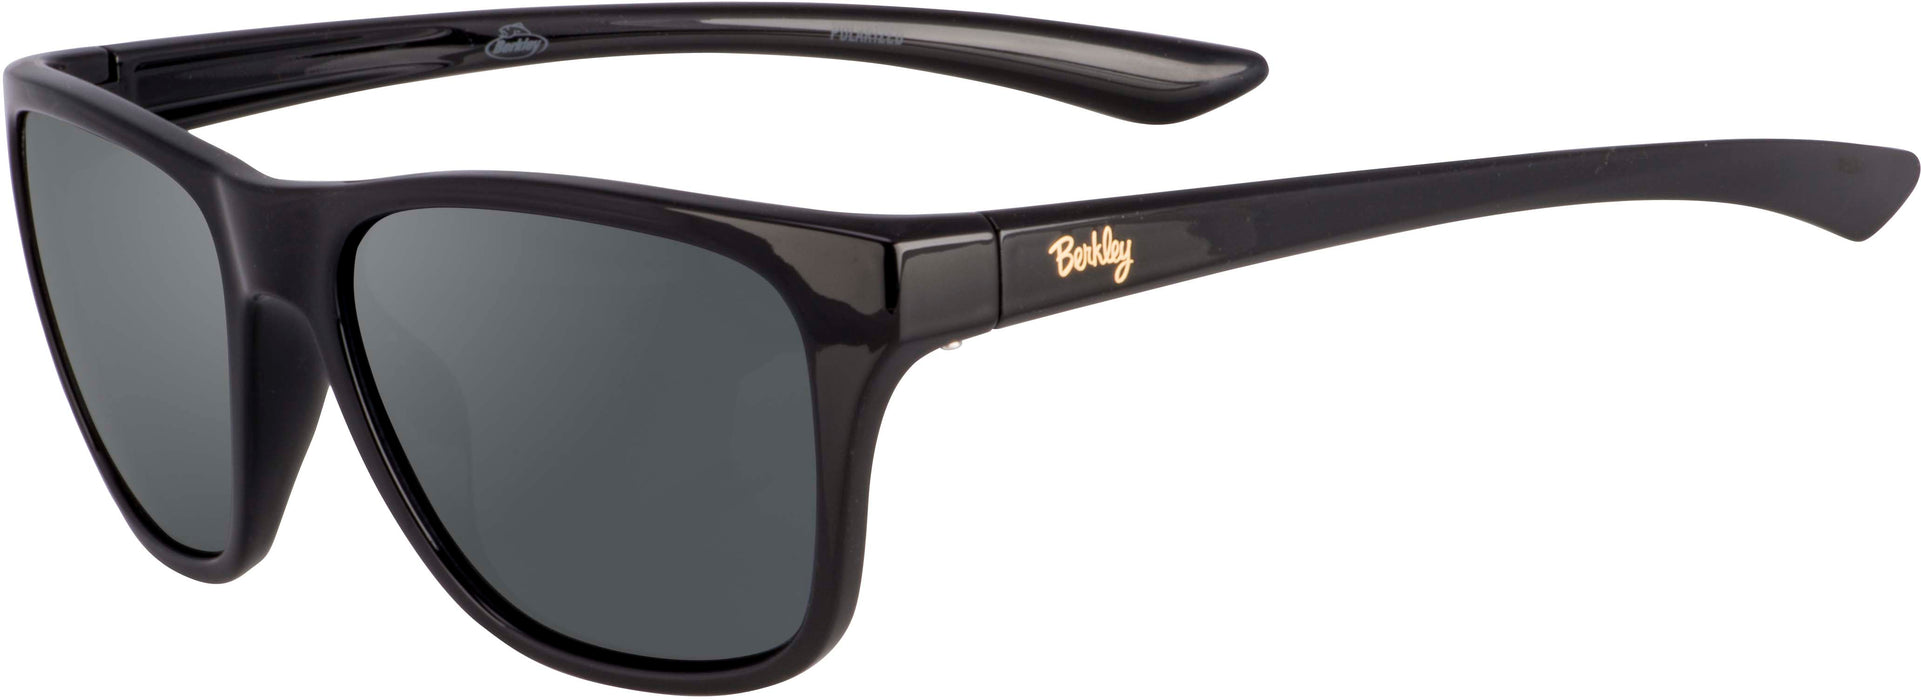 Berkley BER005 Sunglasses